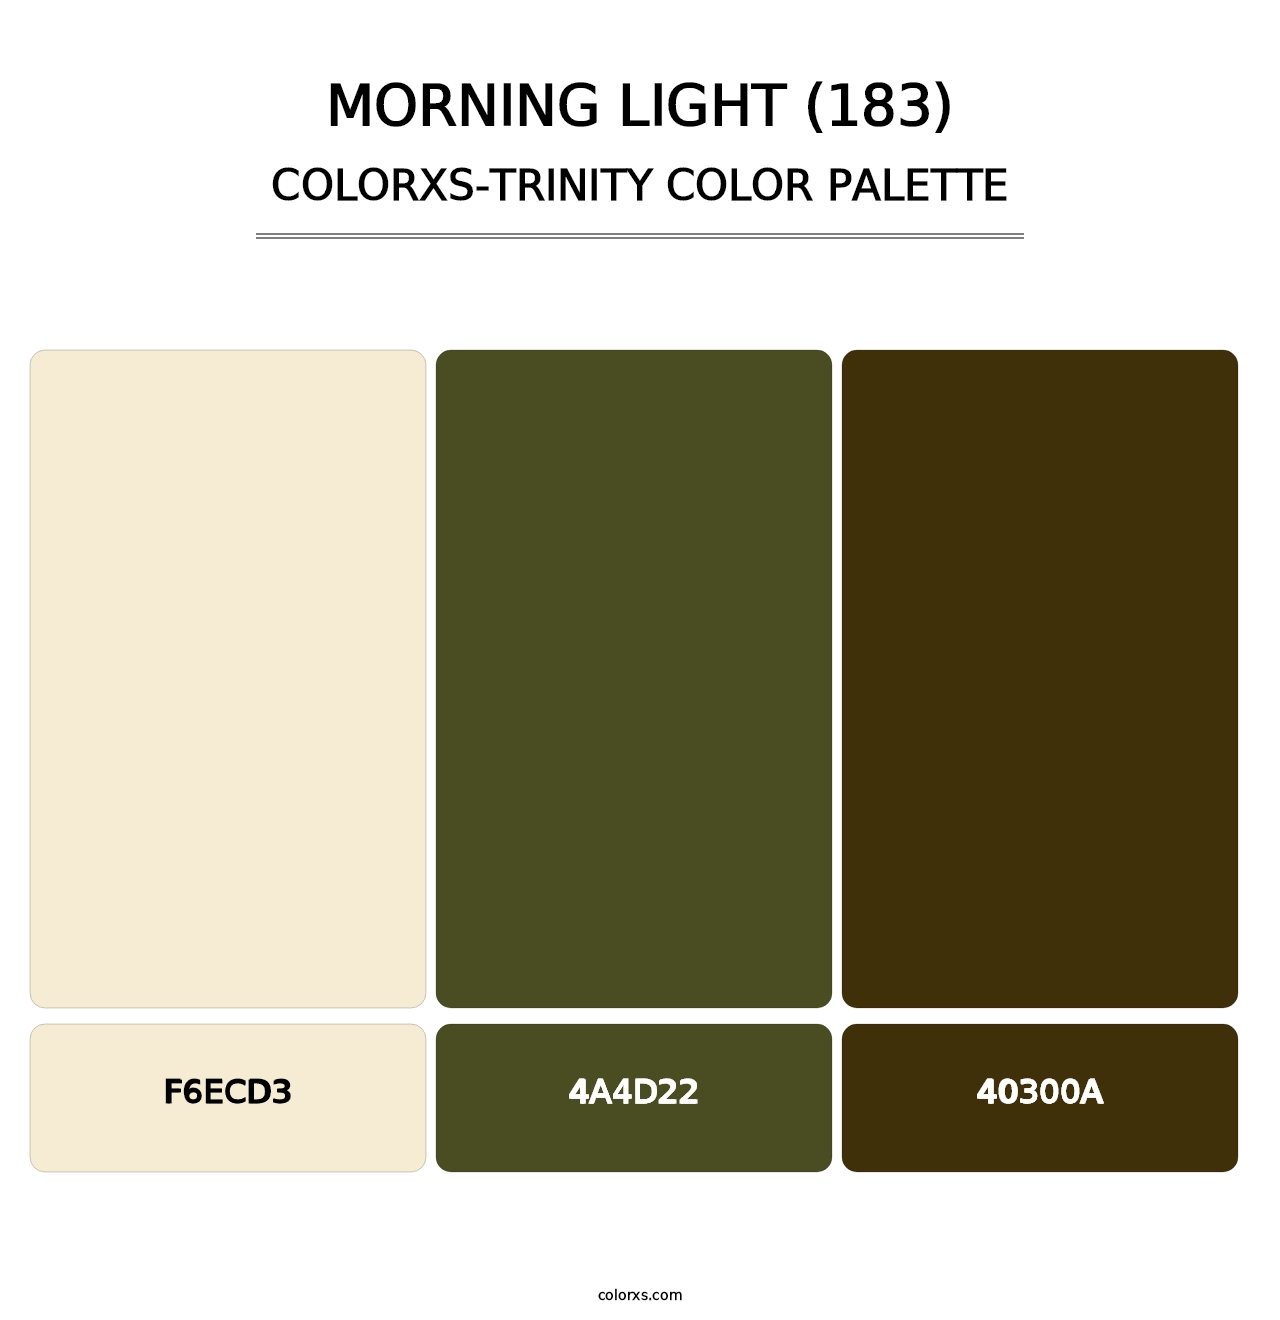 Morning Light (183) - Colorxs Trinity Palette